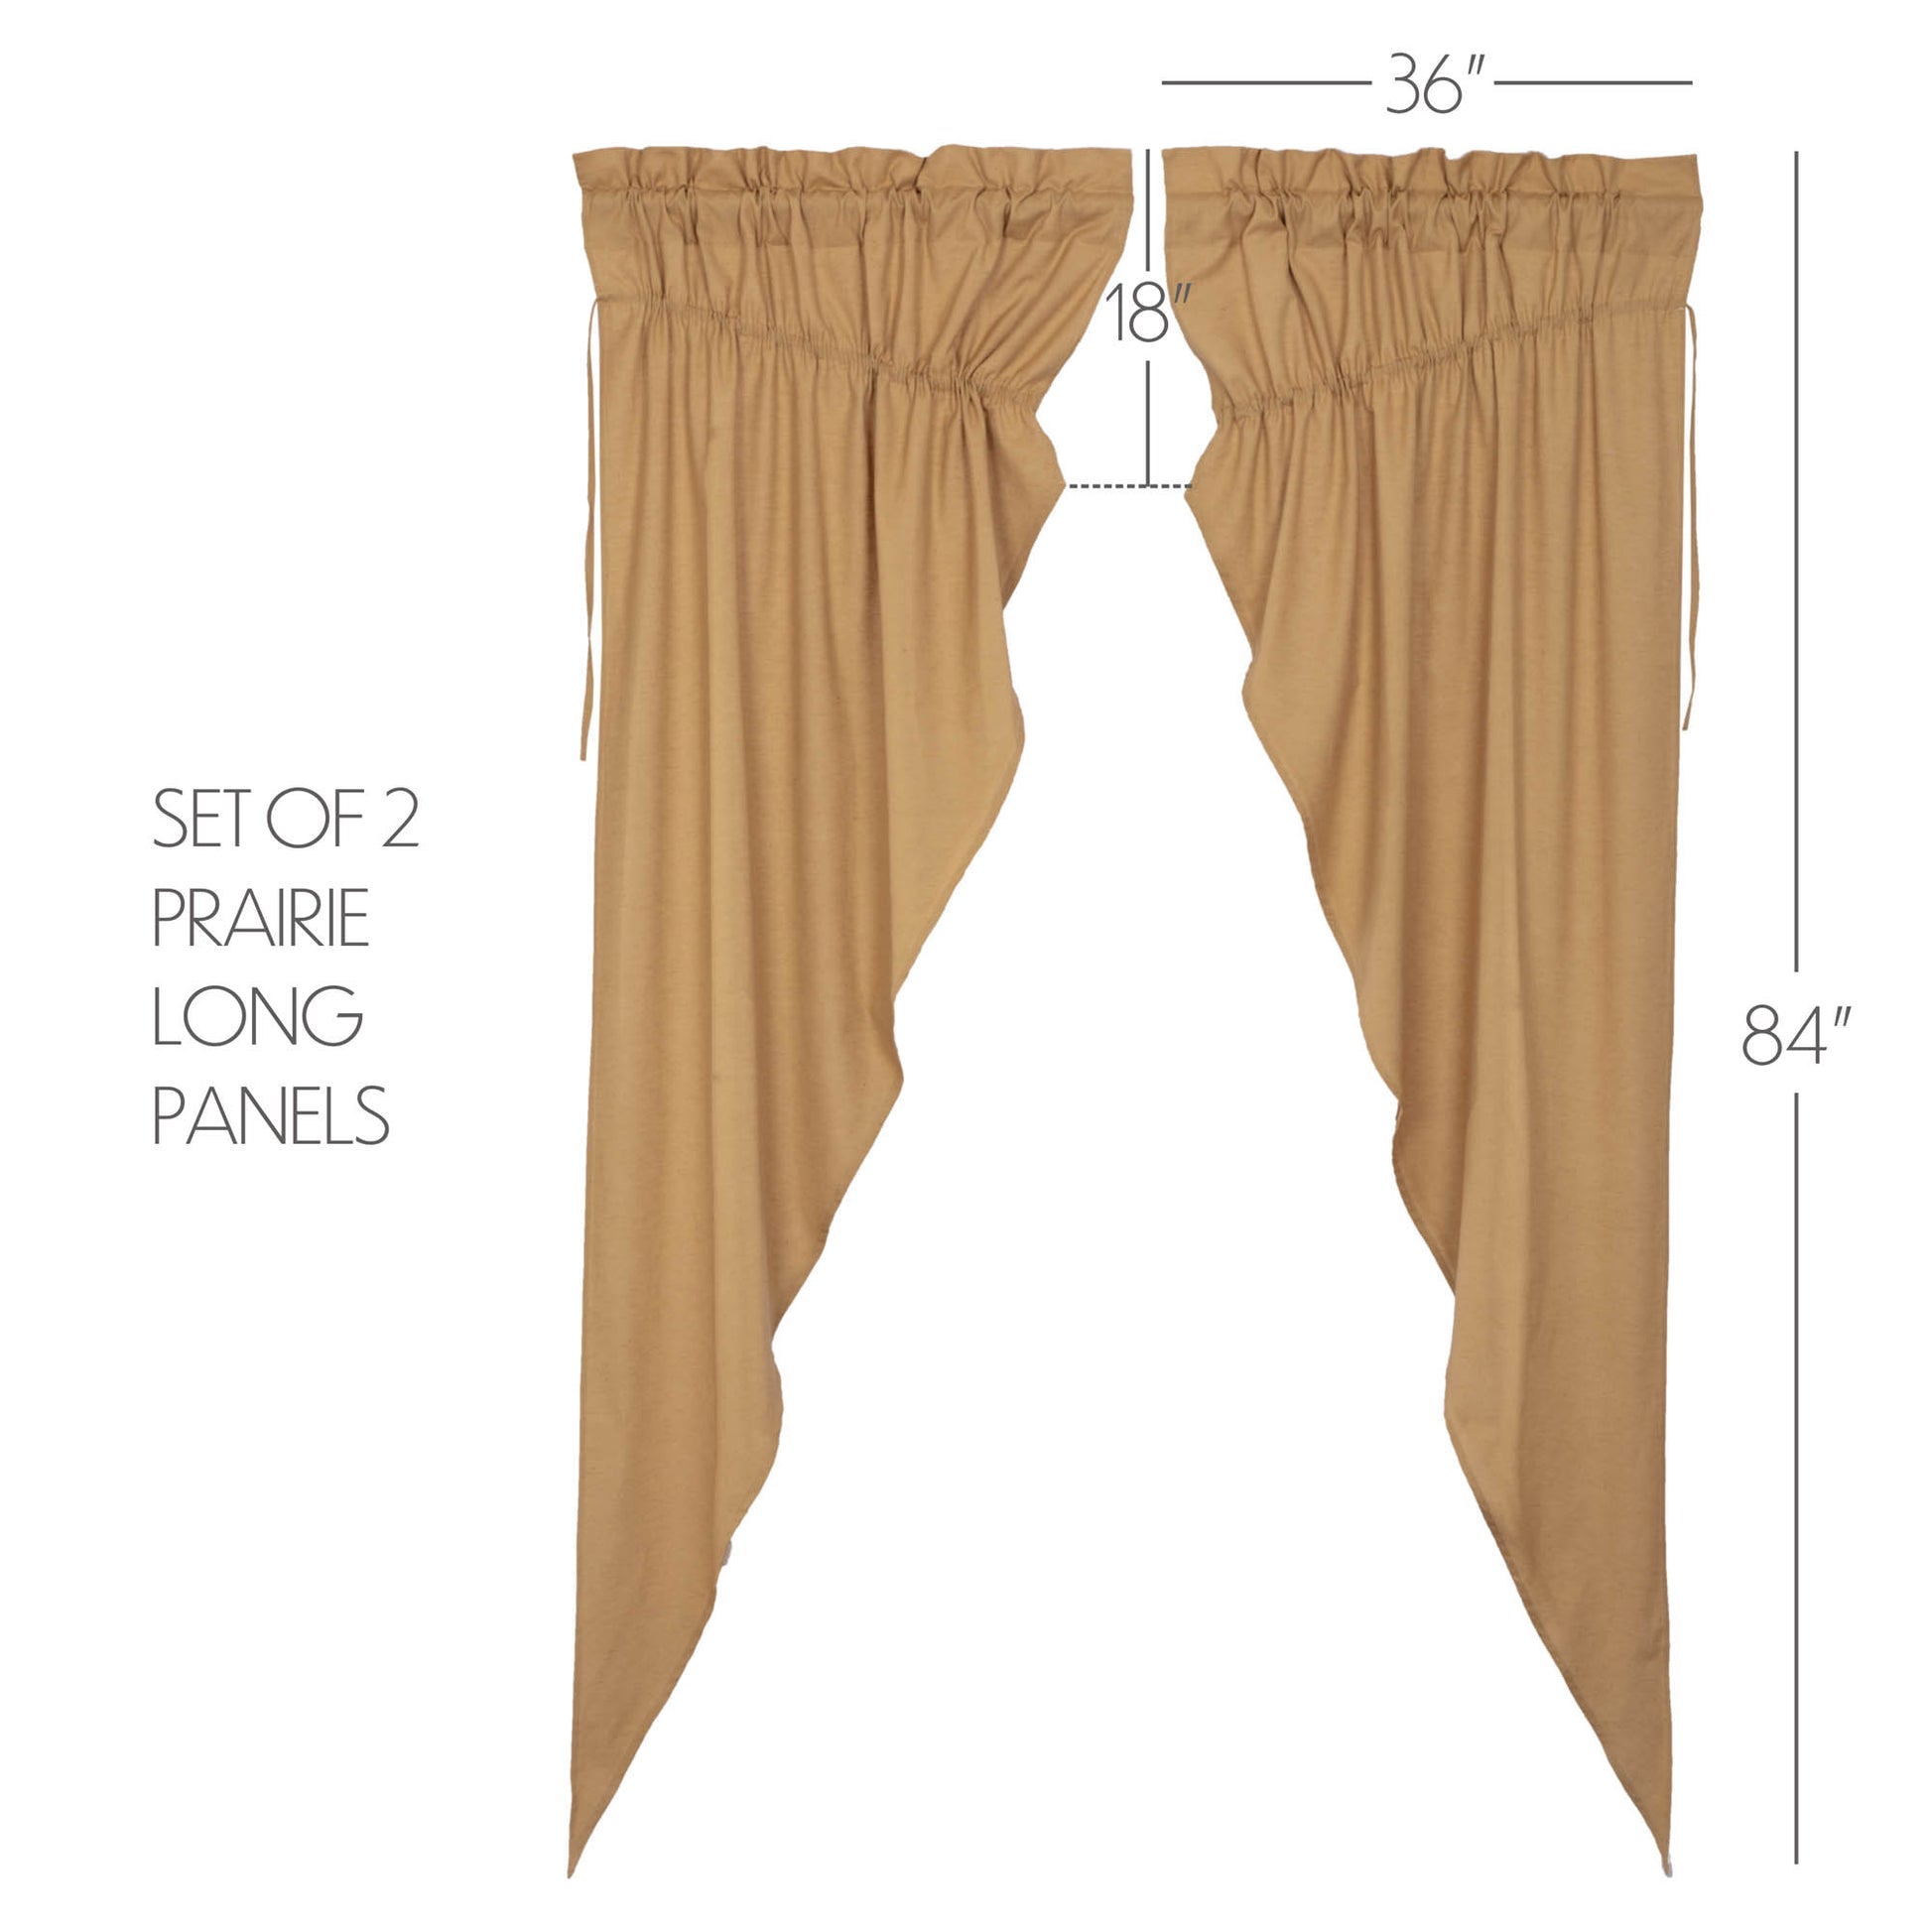 51359-Simple-Life-Flax-Khaki-Prairie-Long-Panel-Set-of-2-84x36x18-image-1